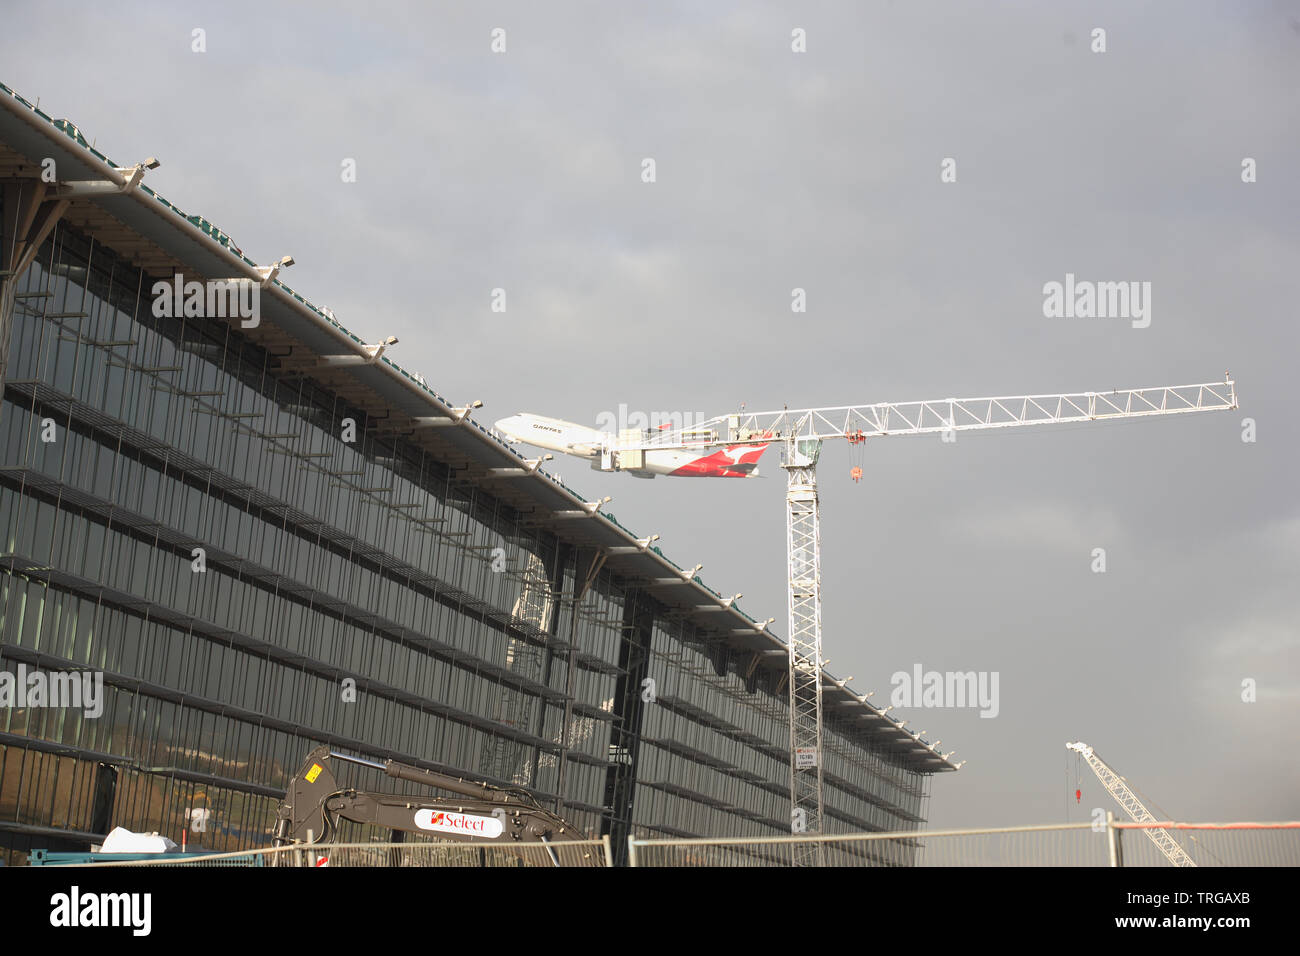 London Heathrow Terminal 5 Under Construction Stock Photo